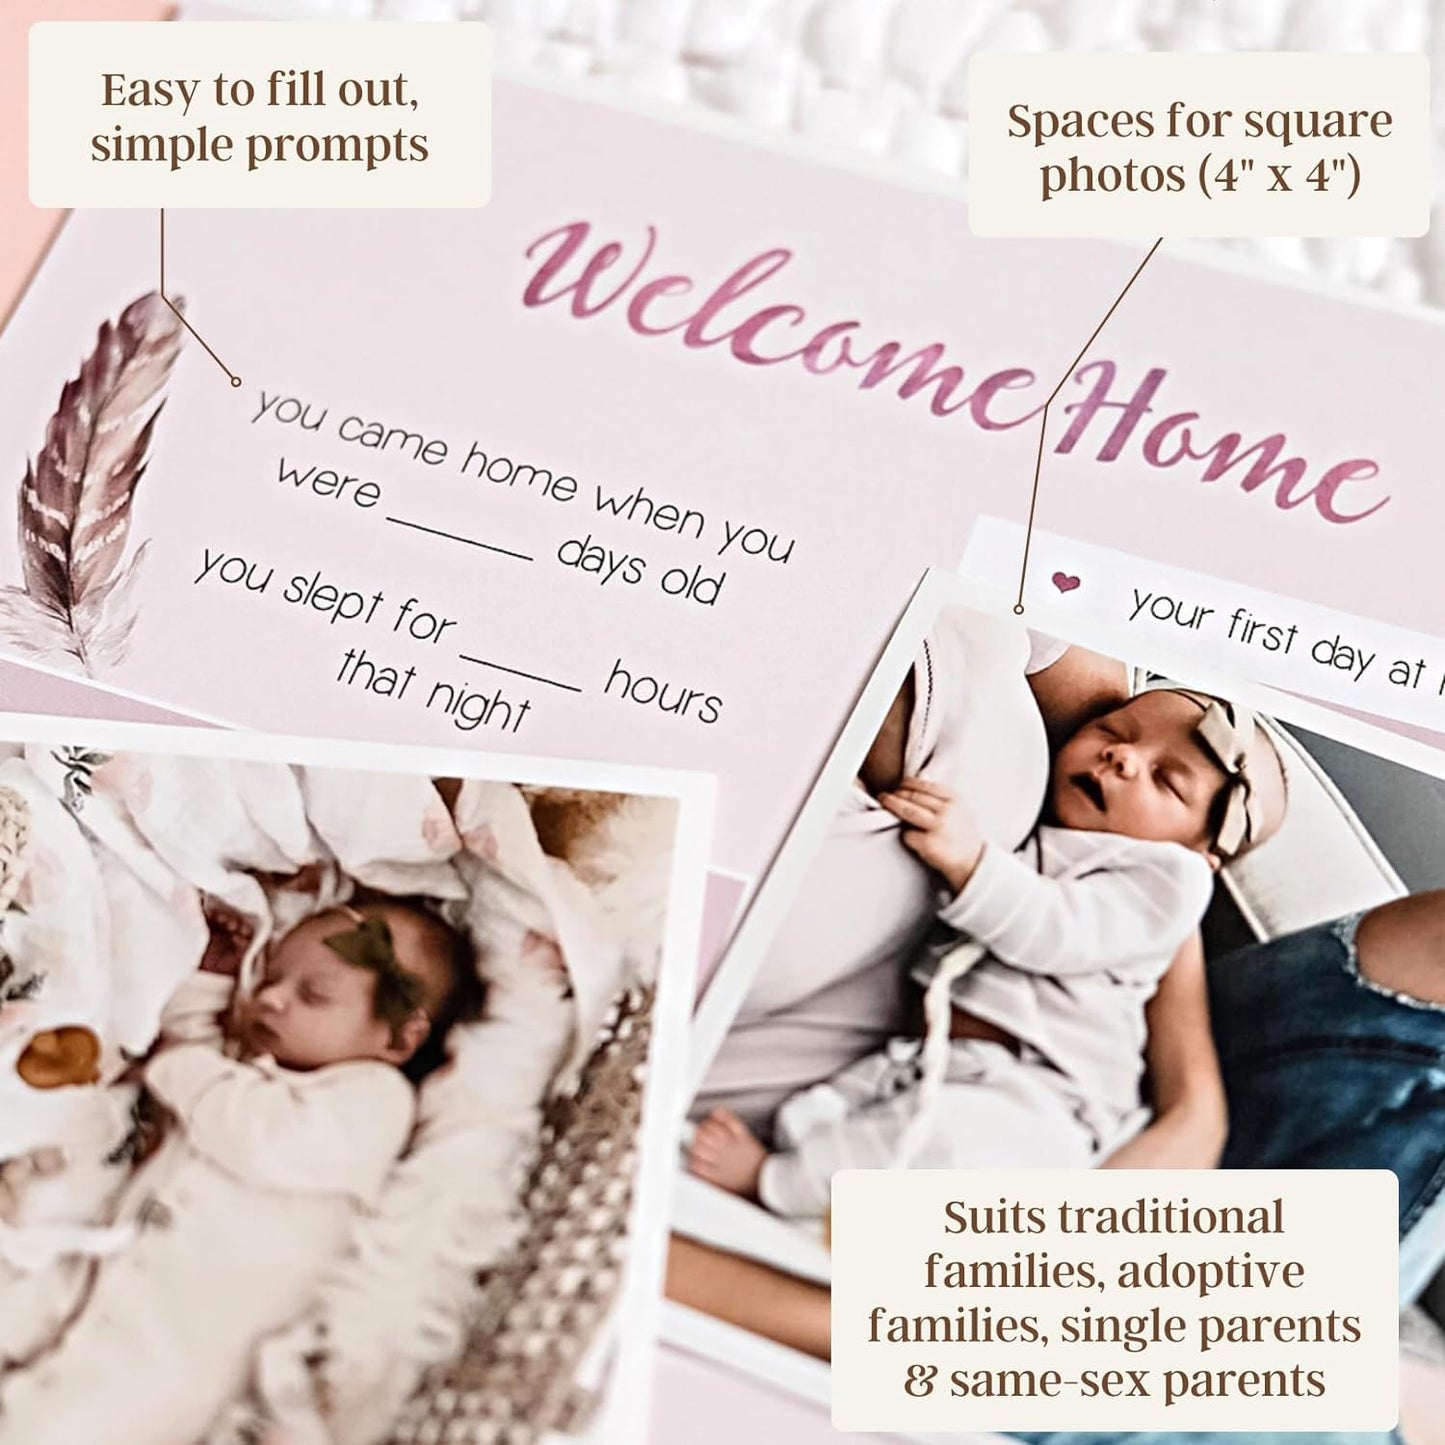 Peachly Baby Memory Book For Girls Milestone Keepsake Journal | First Five Years Baby Girl Memory Book | Baby Keepsakes First Year Memory Book | Baby Girl Baby Book | Bloom